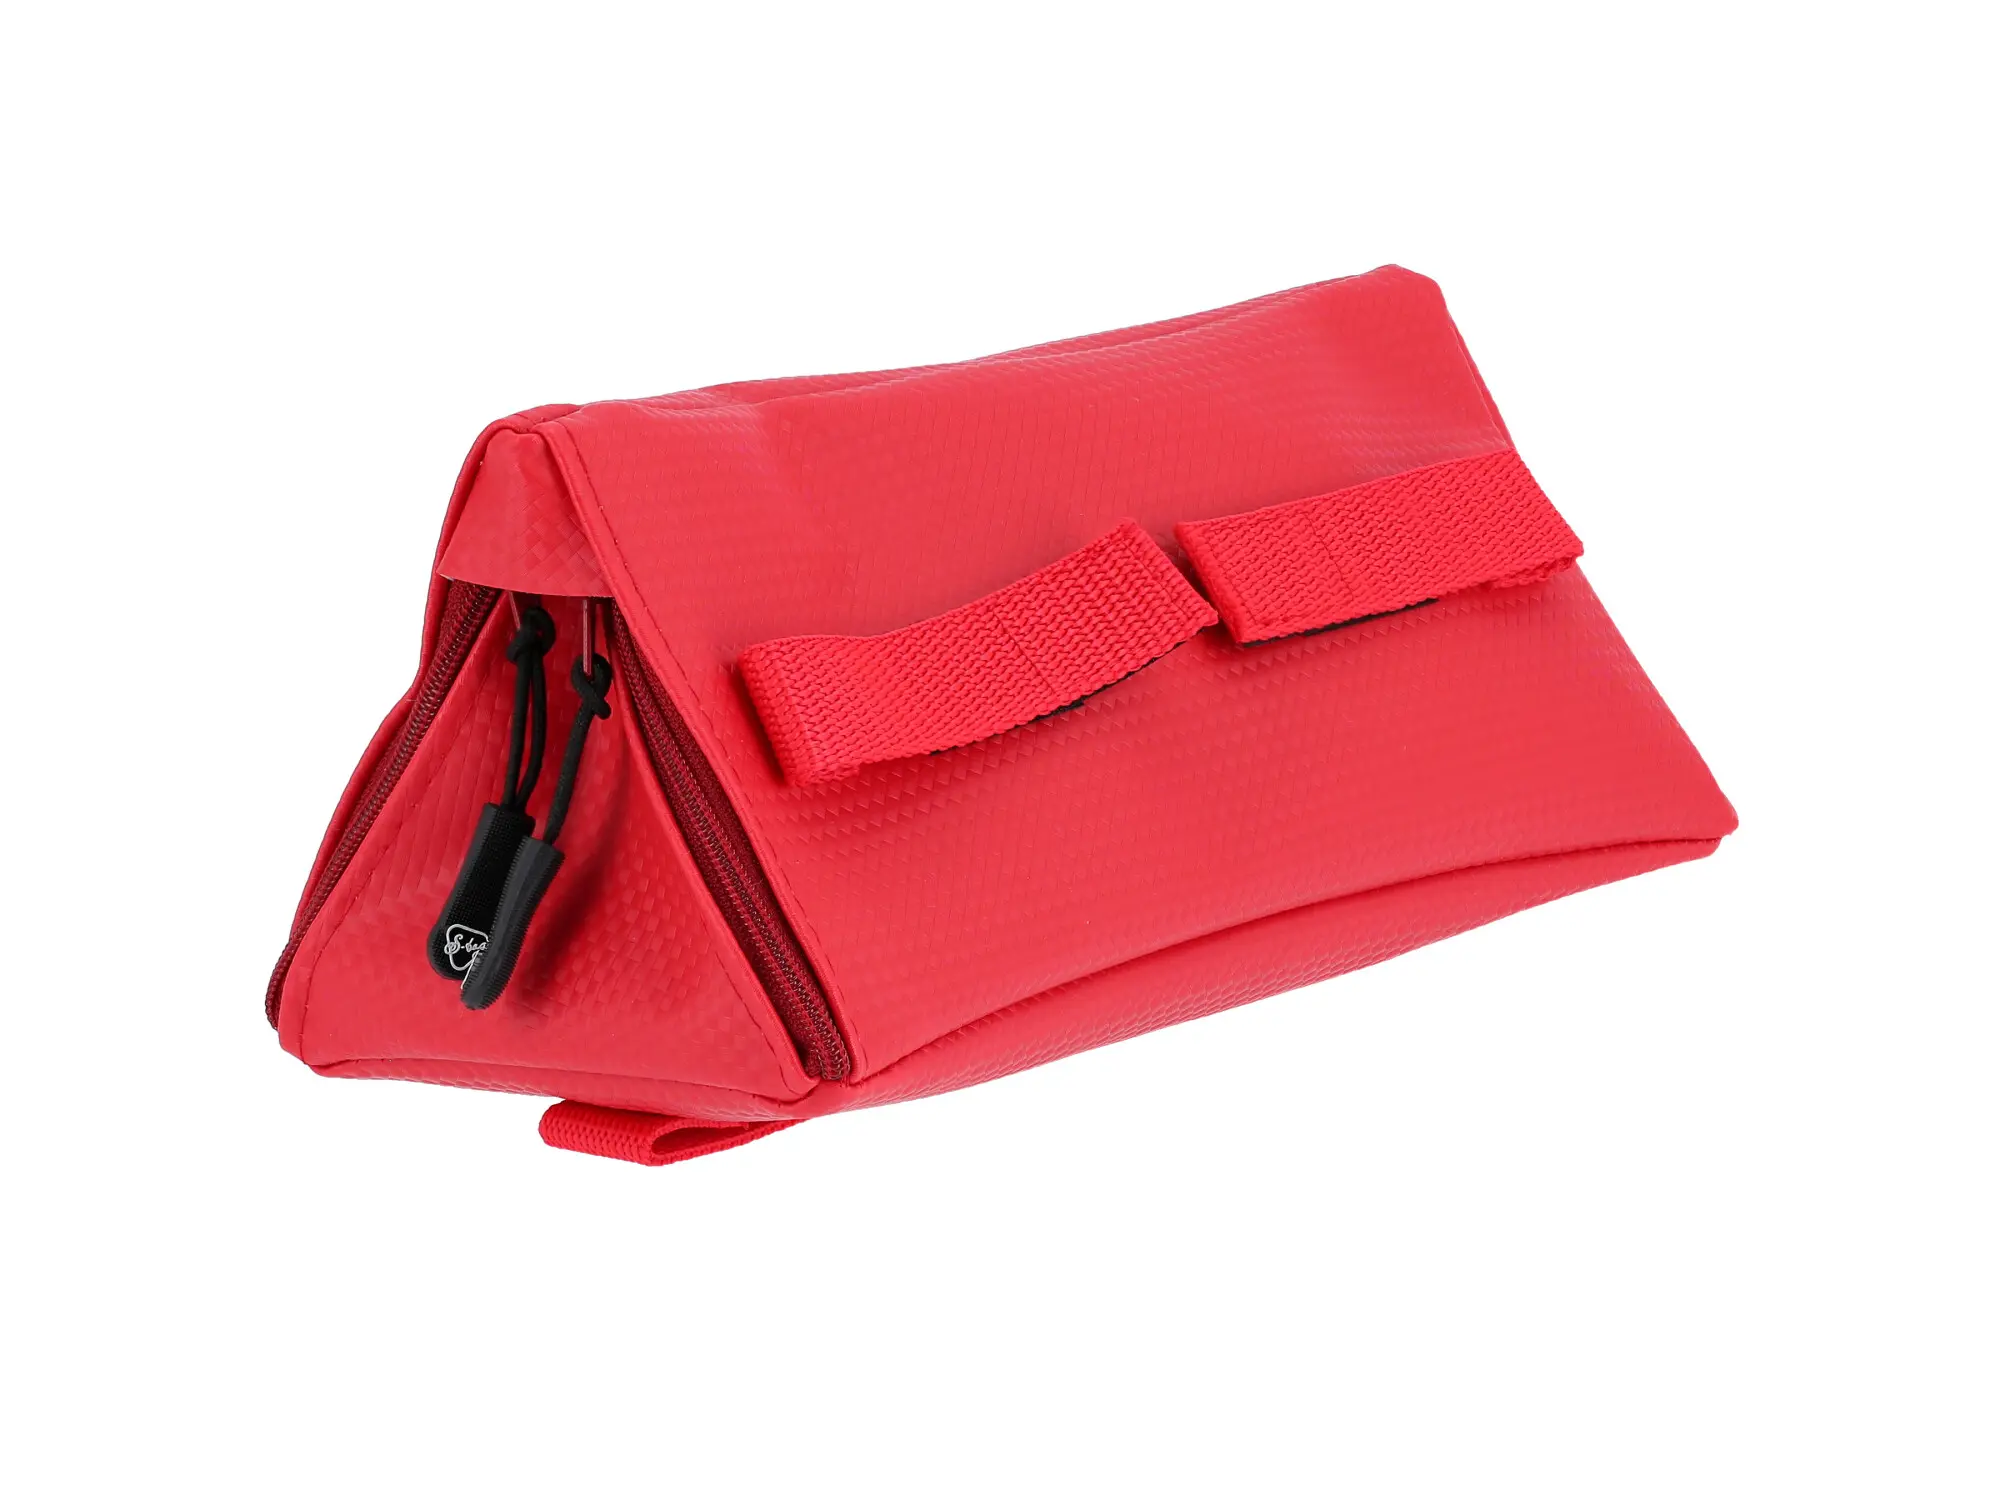 S-Bag Werkzeugtasche, Kunstleder - Carbon Rot, Art.-Nr.: 10075877 - Bild 1